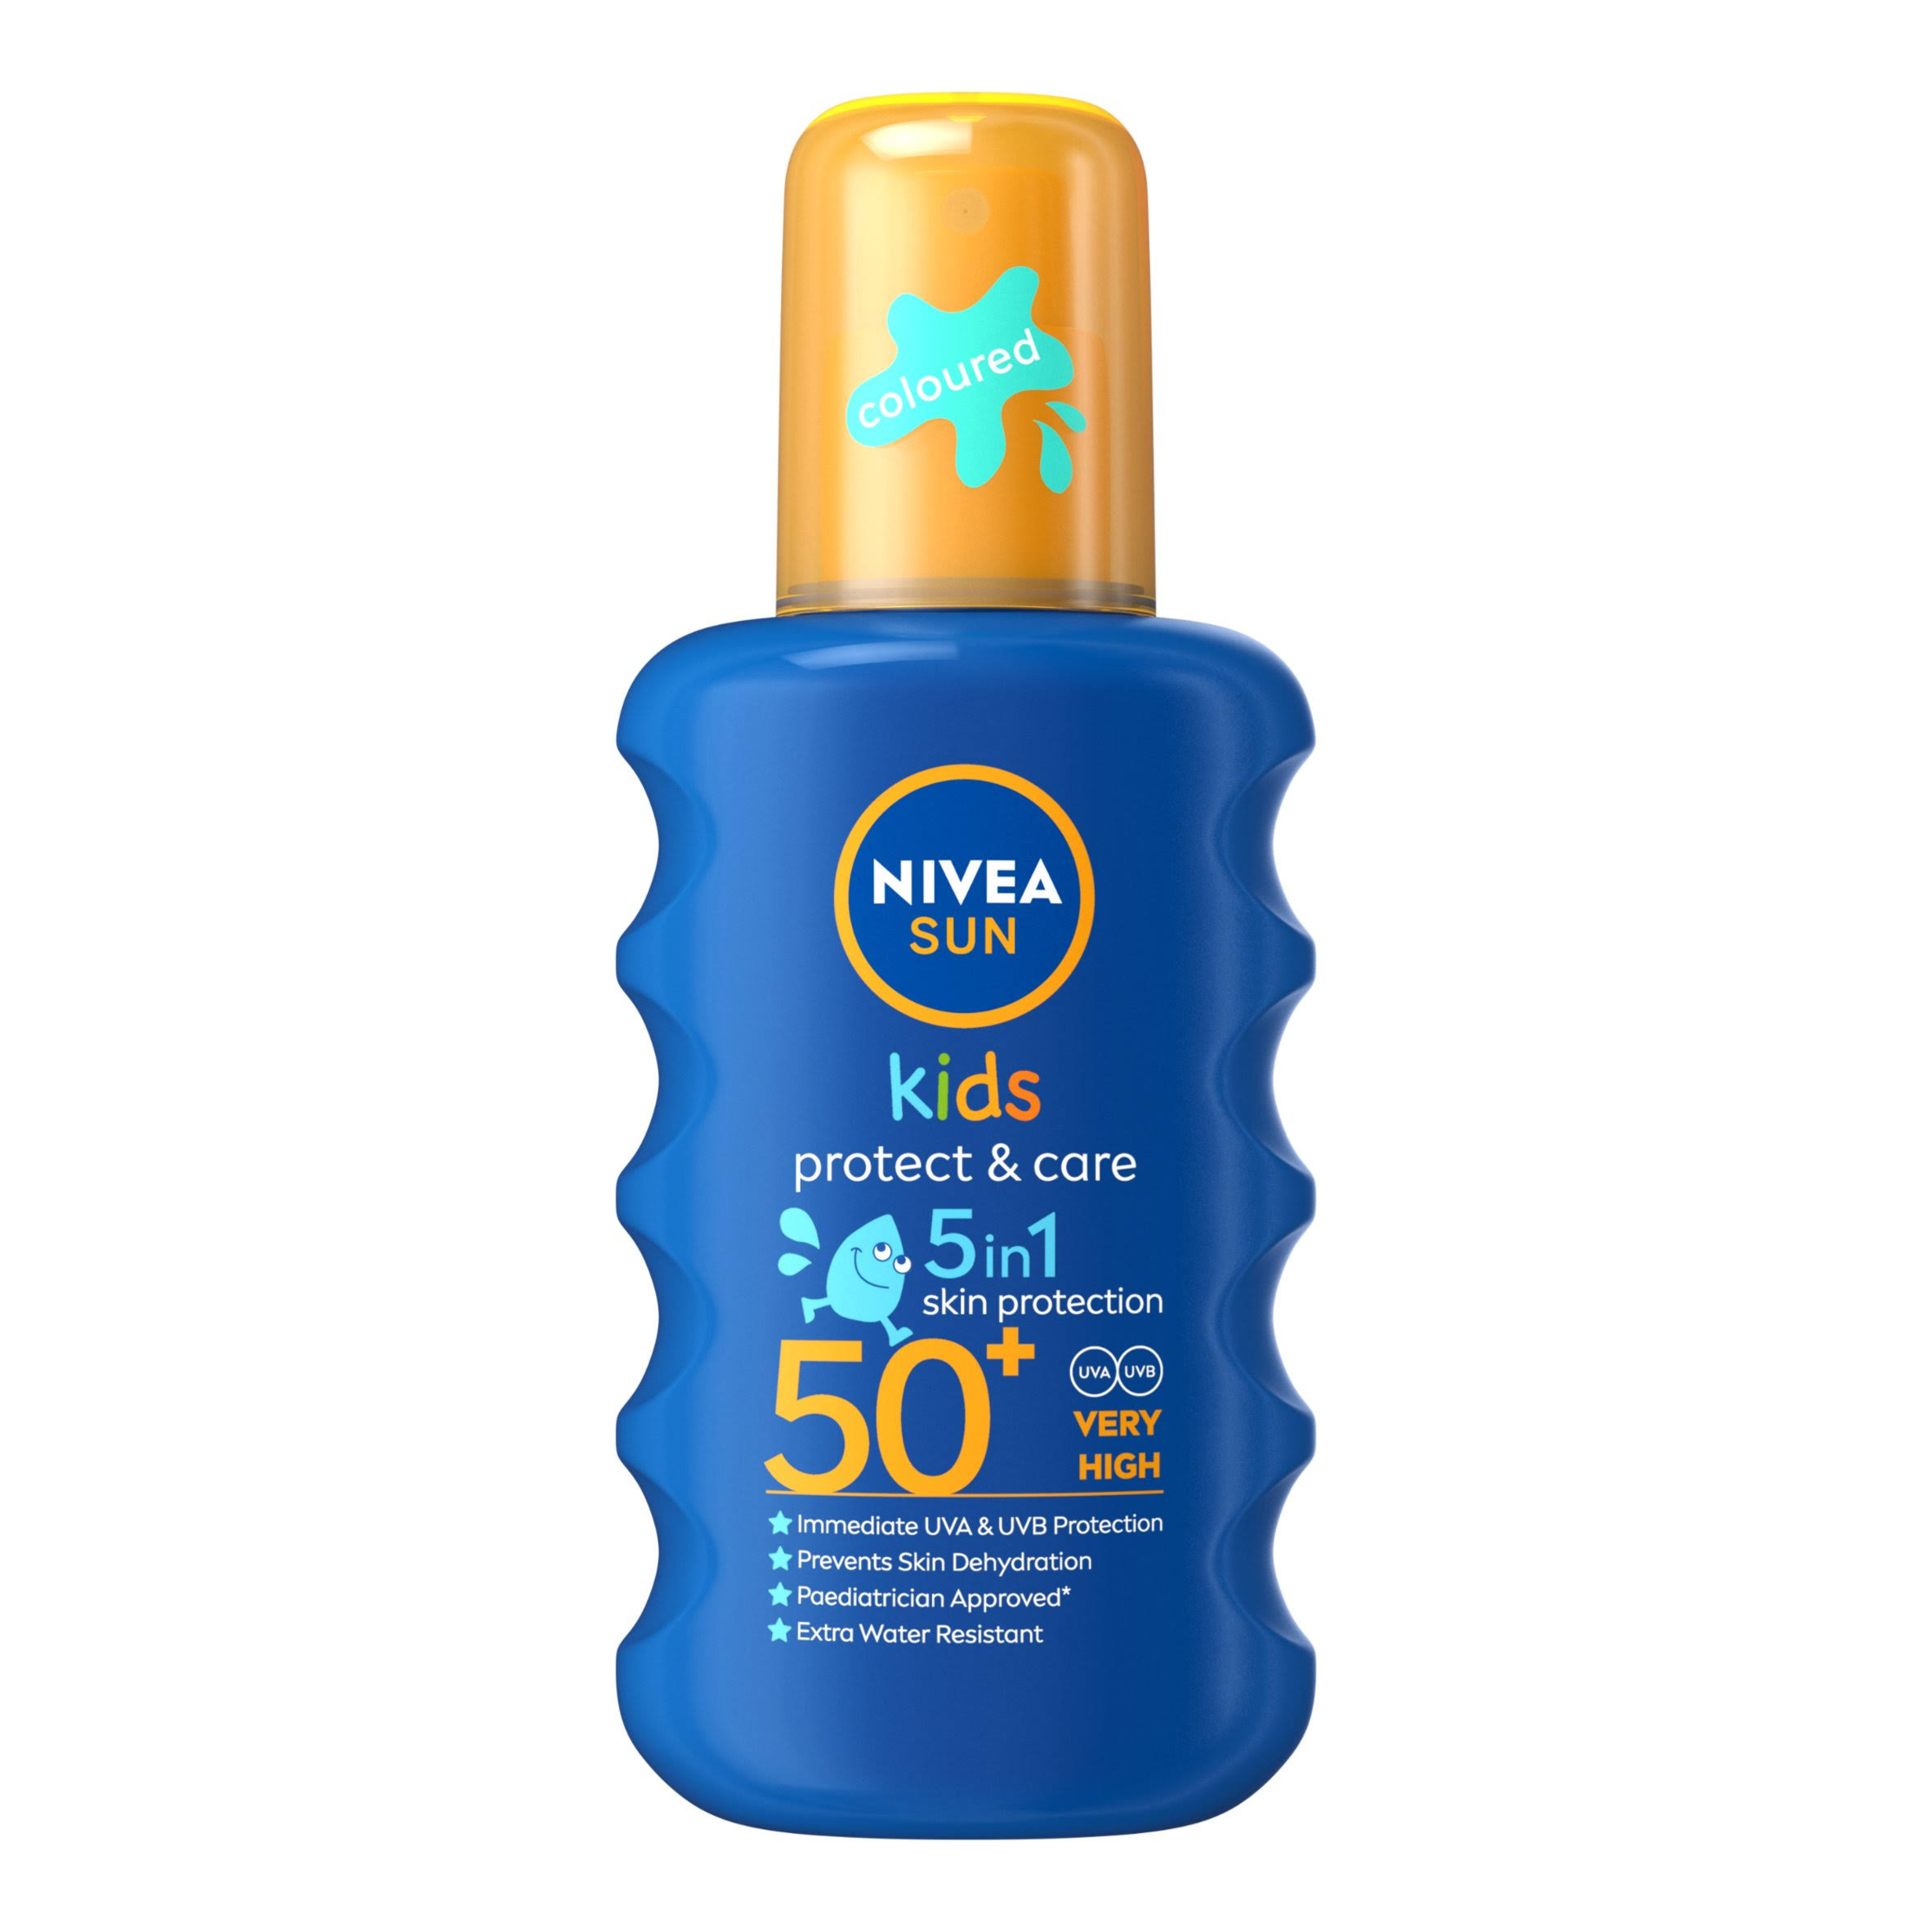 NIVEA SUN Kids Moisturising Sun Spray - SPF 50+, Very High, 200ml